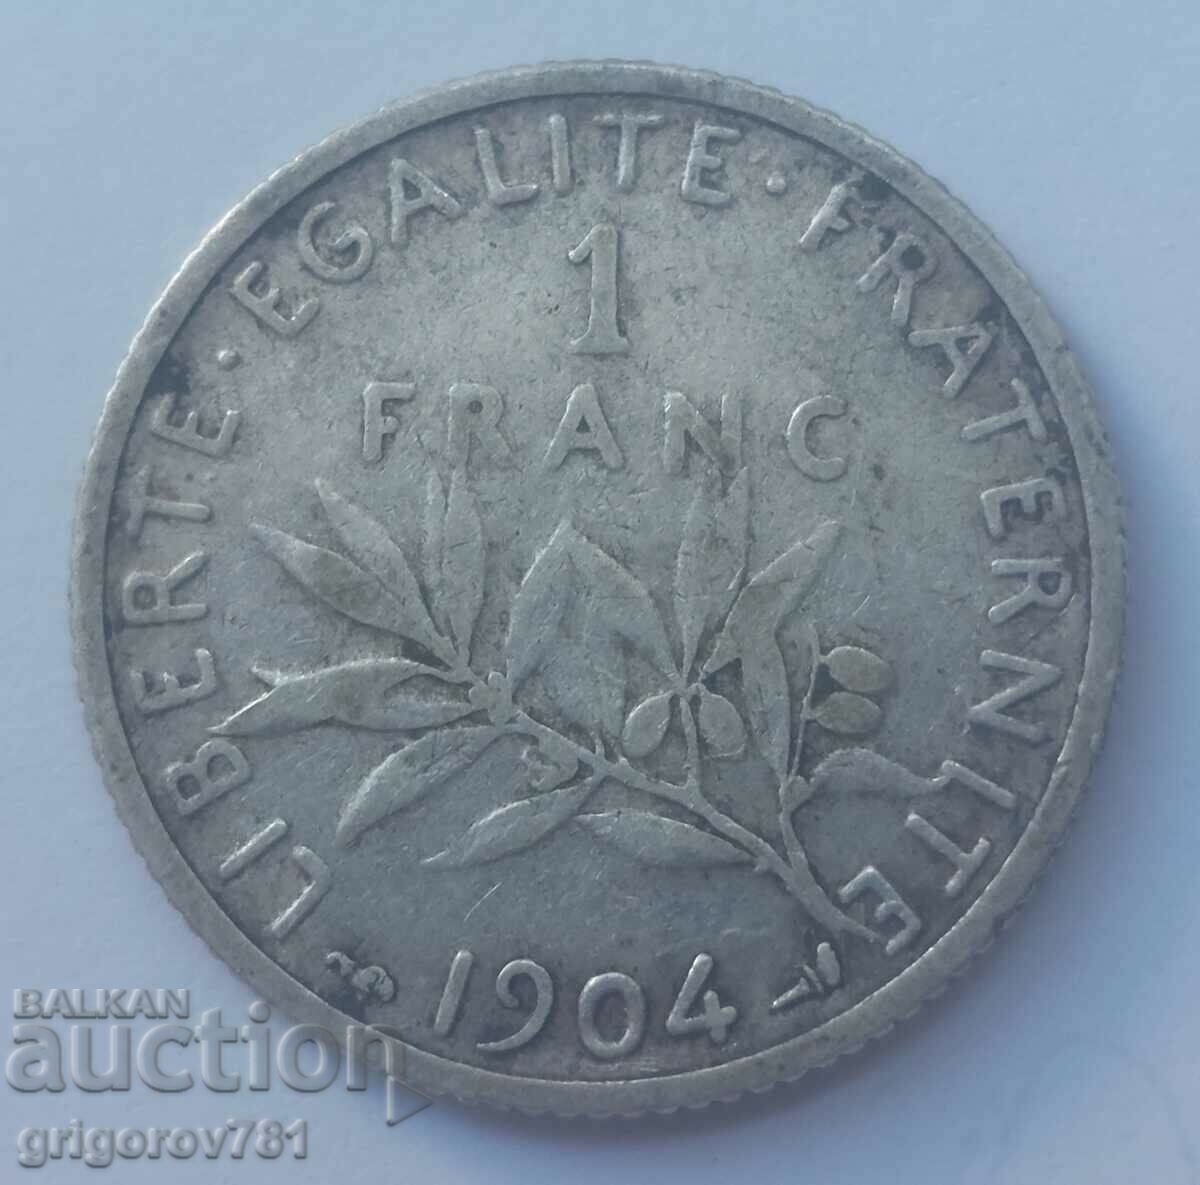 1 franc silver France 1904 - silver coin №29